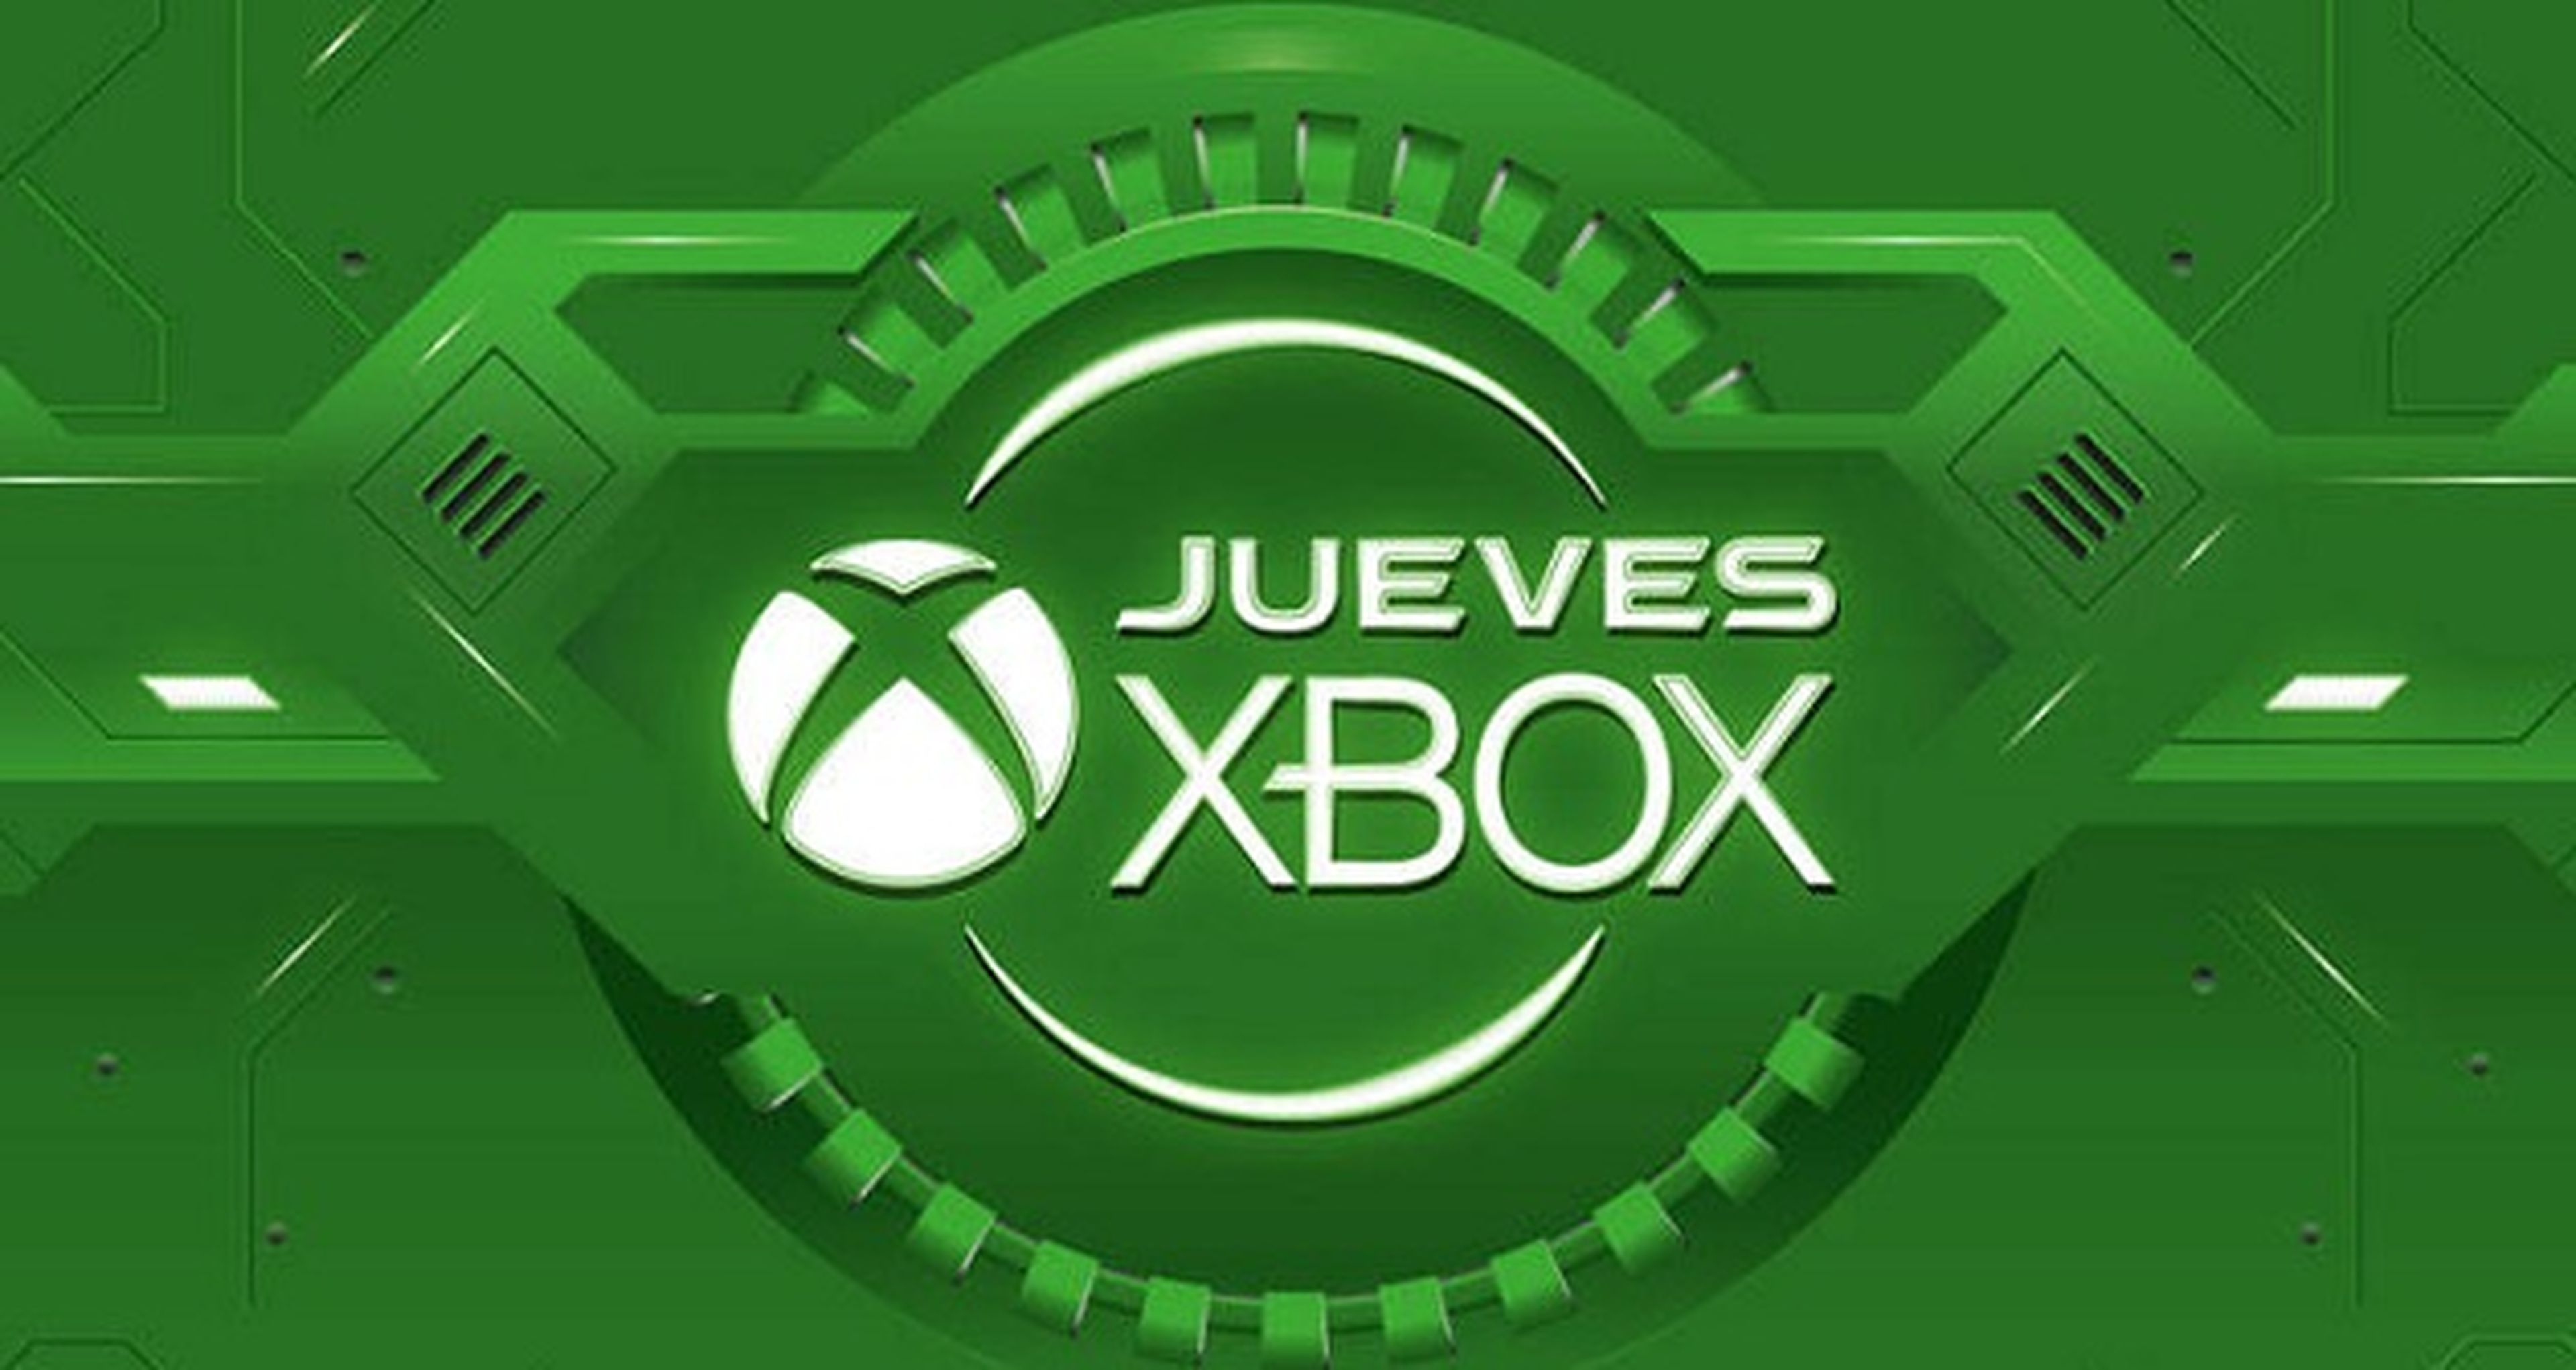 Jueves Xbox en GAME: sexta semana de ofertas